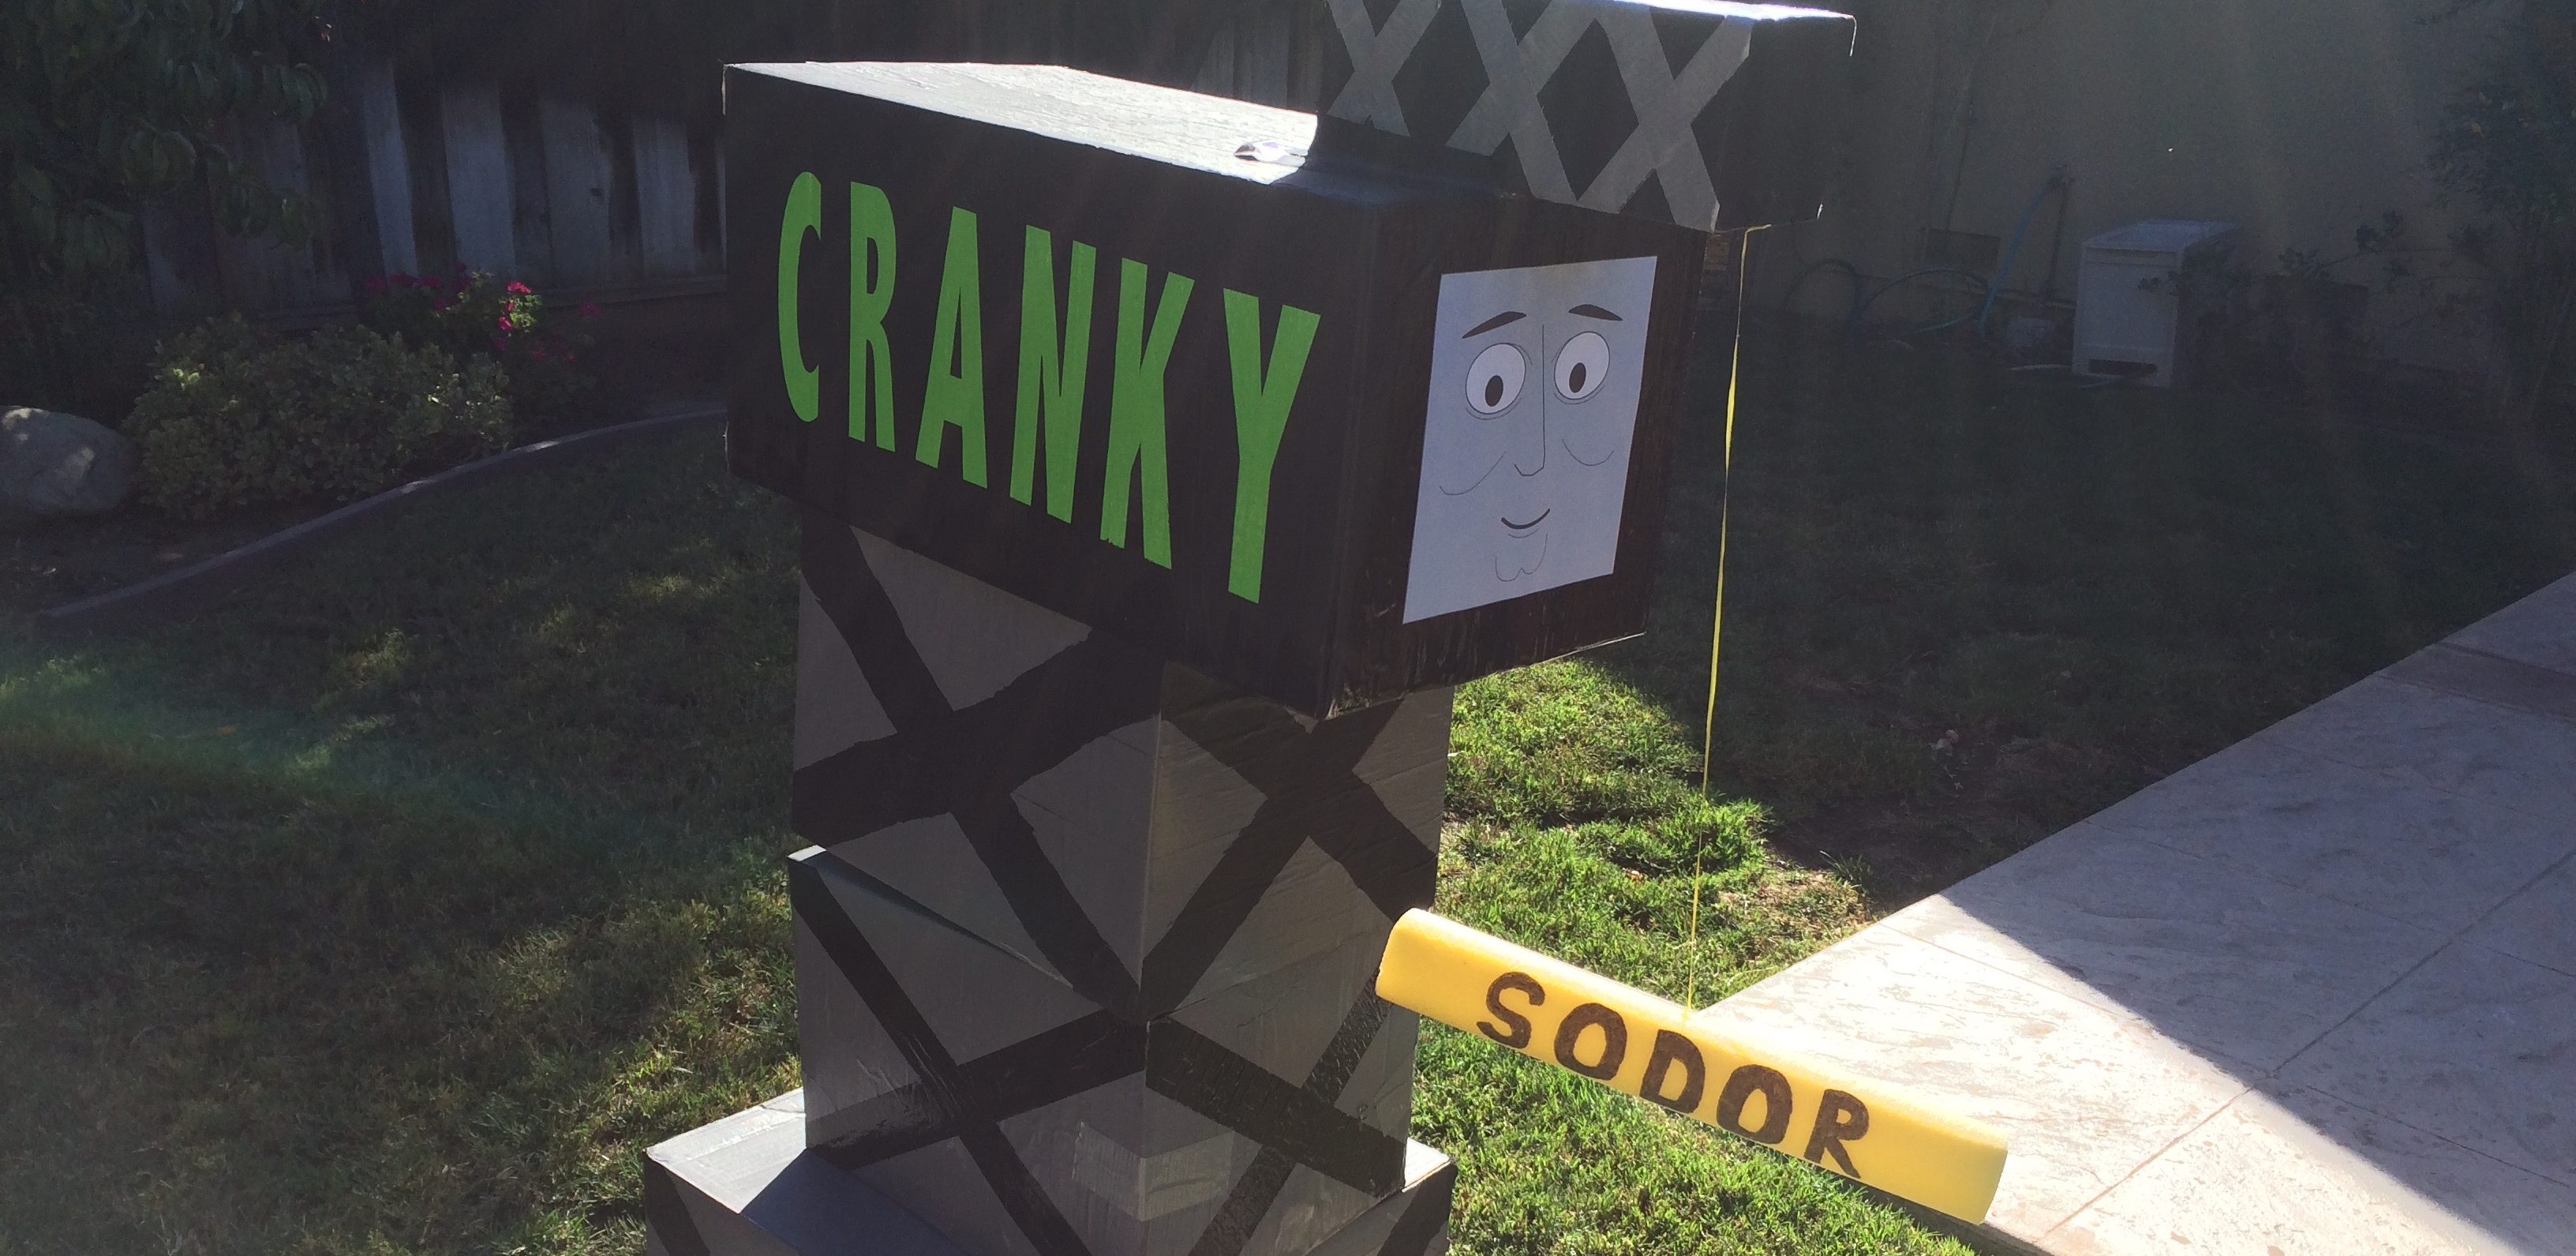 DIY Cardboard Cranky Crane